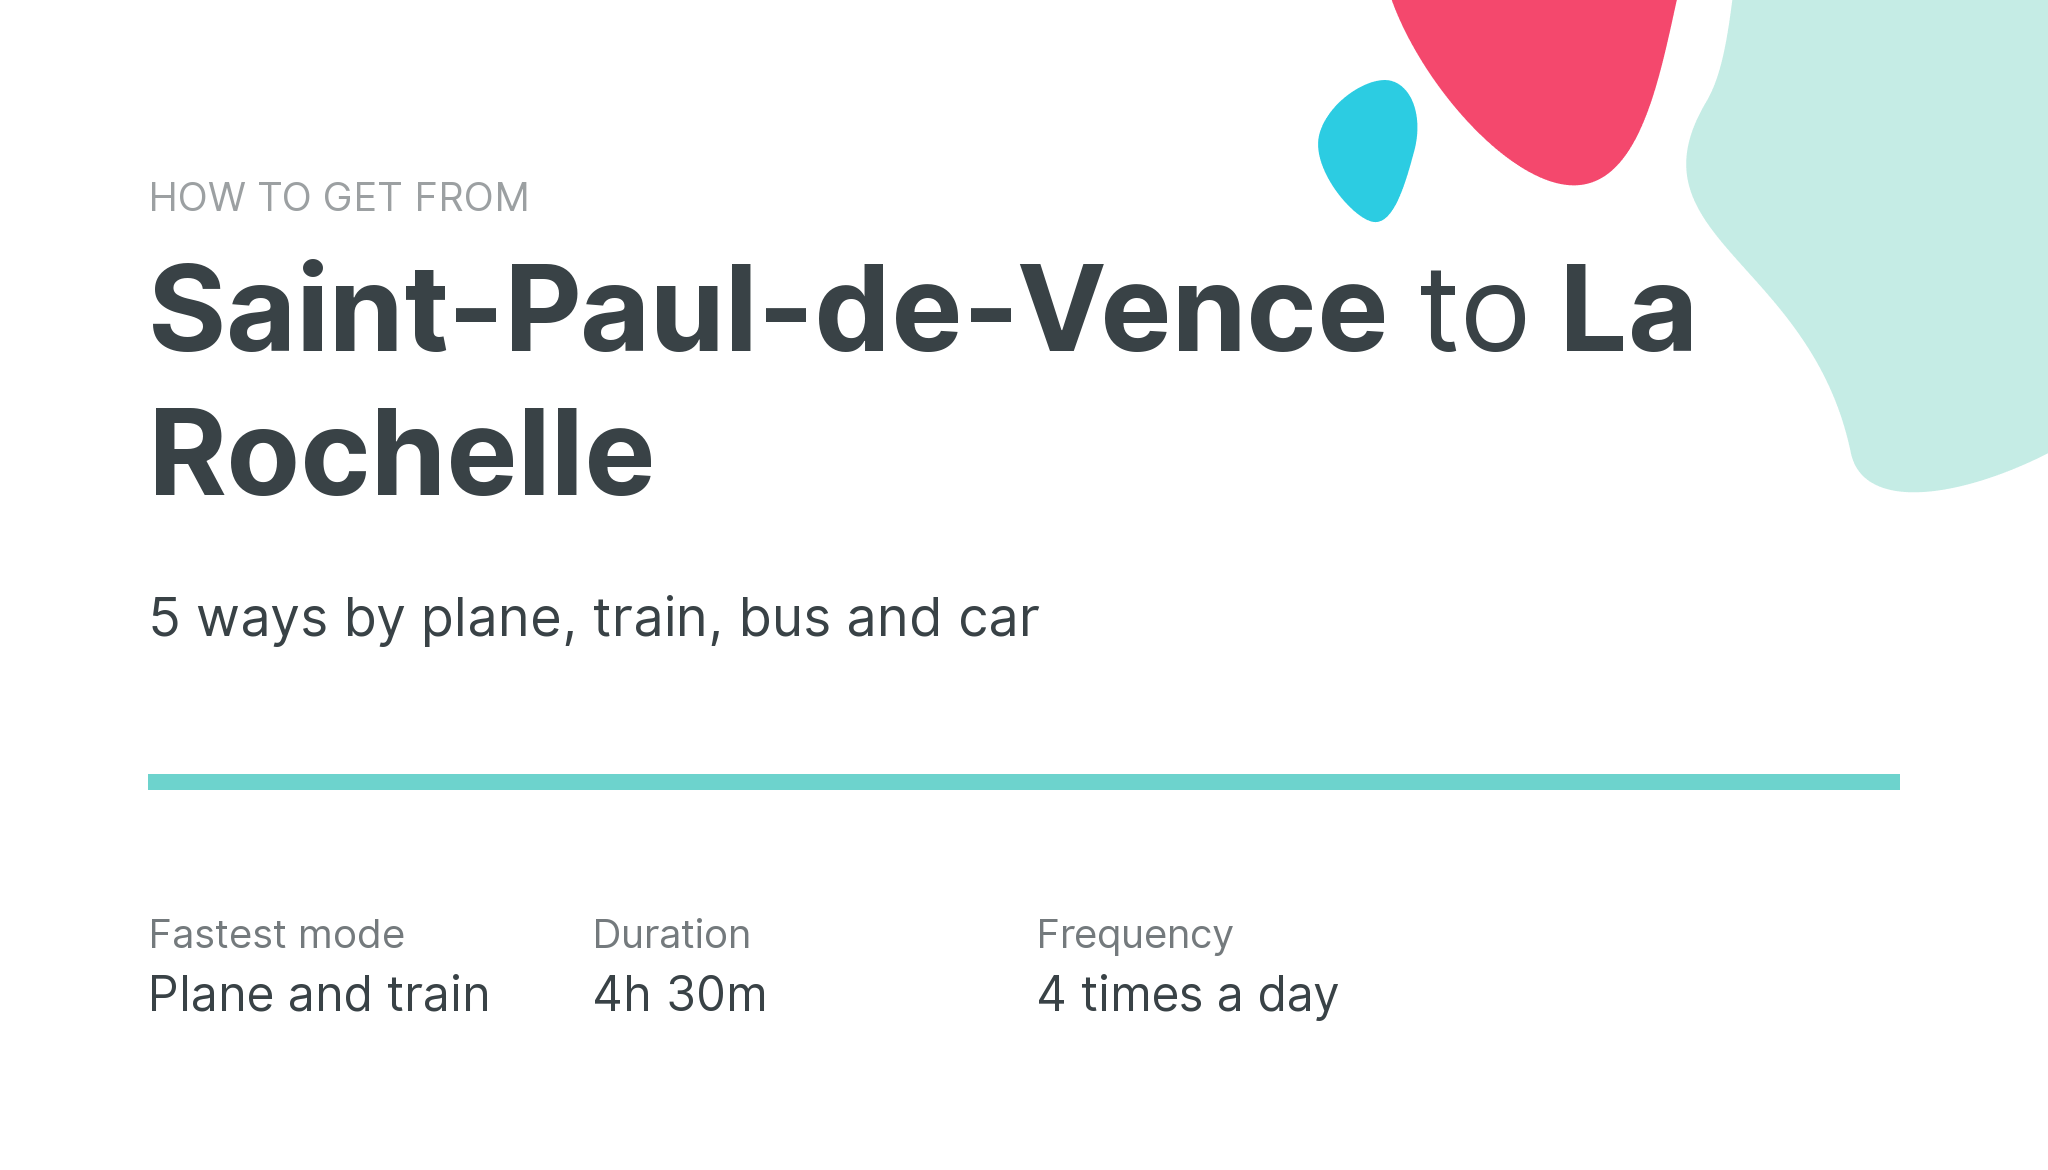 How do I get from Saint-Paul-de-Vence to La Rochelle